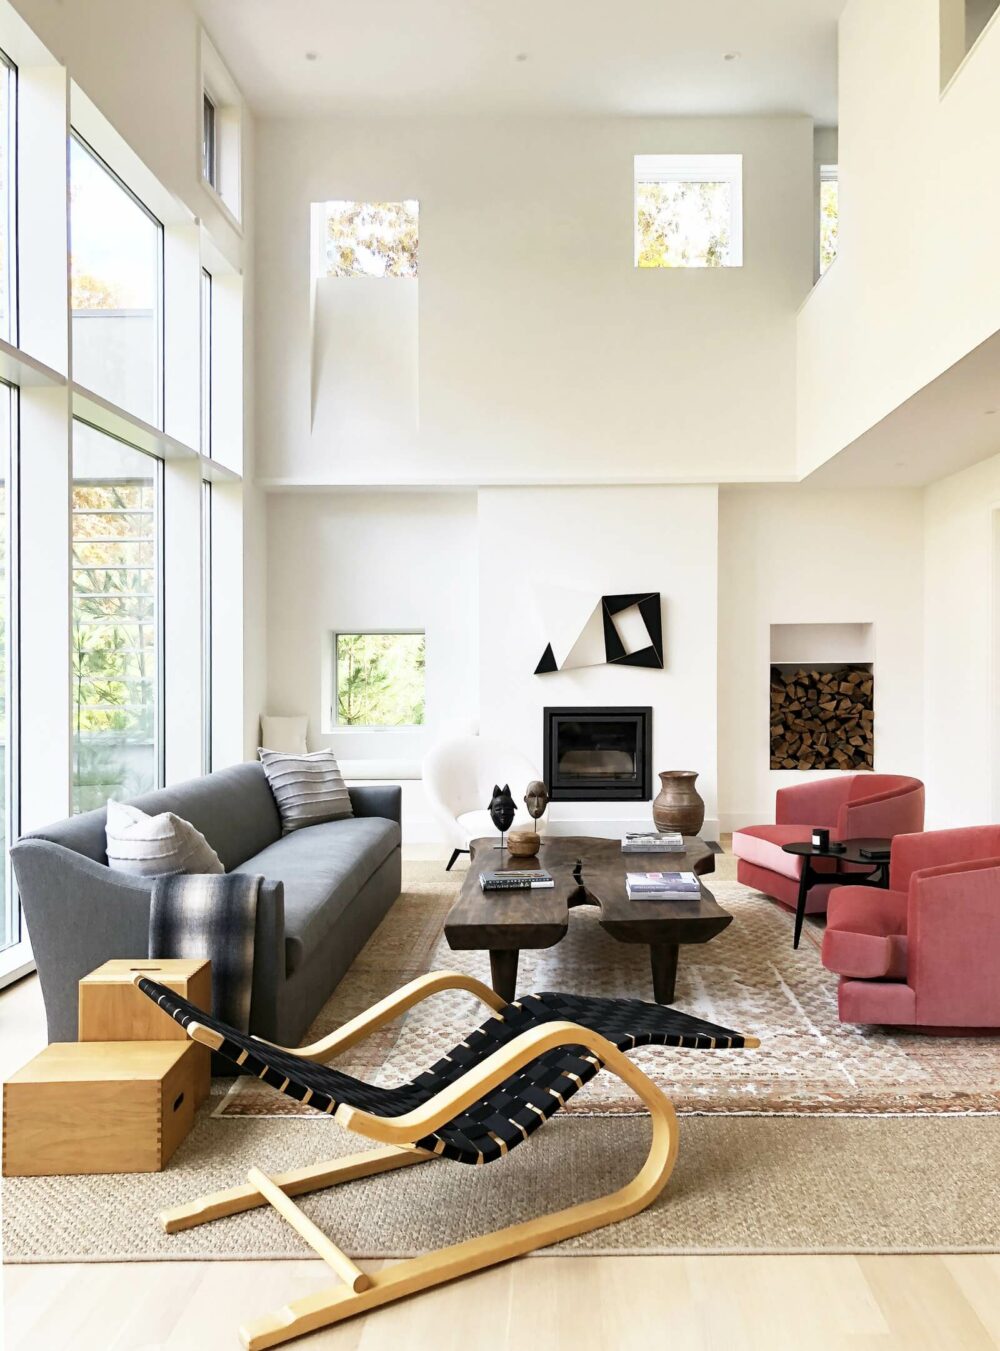 rustic living room furniture ideas